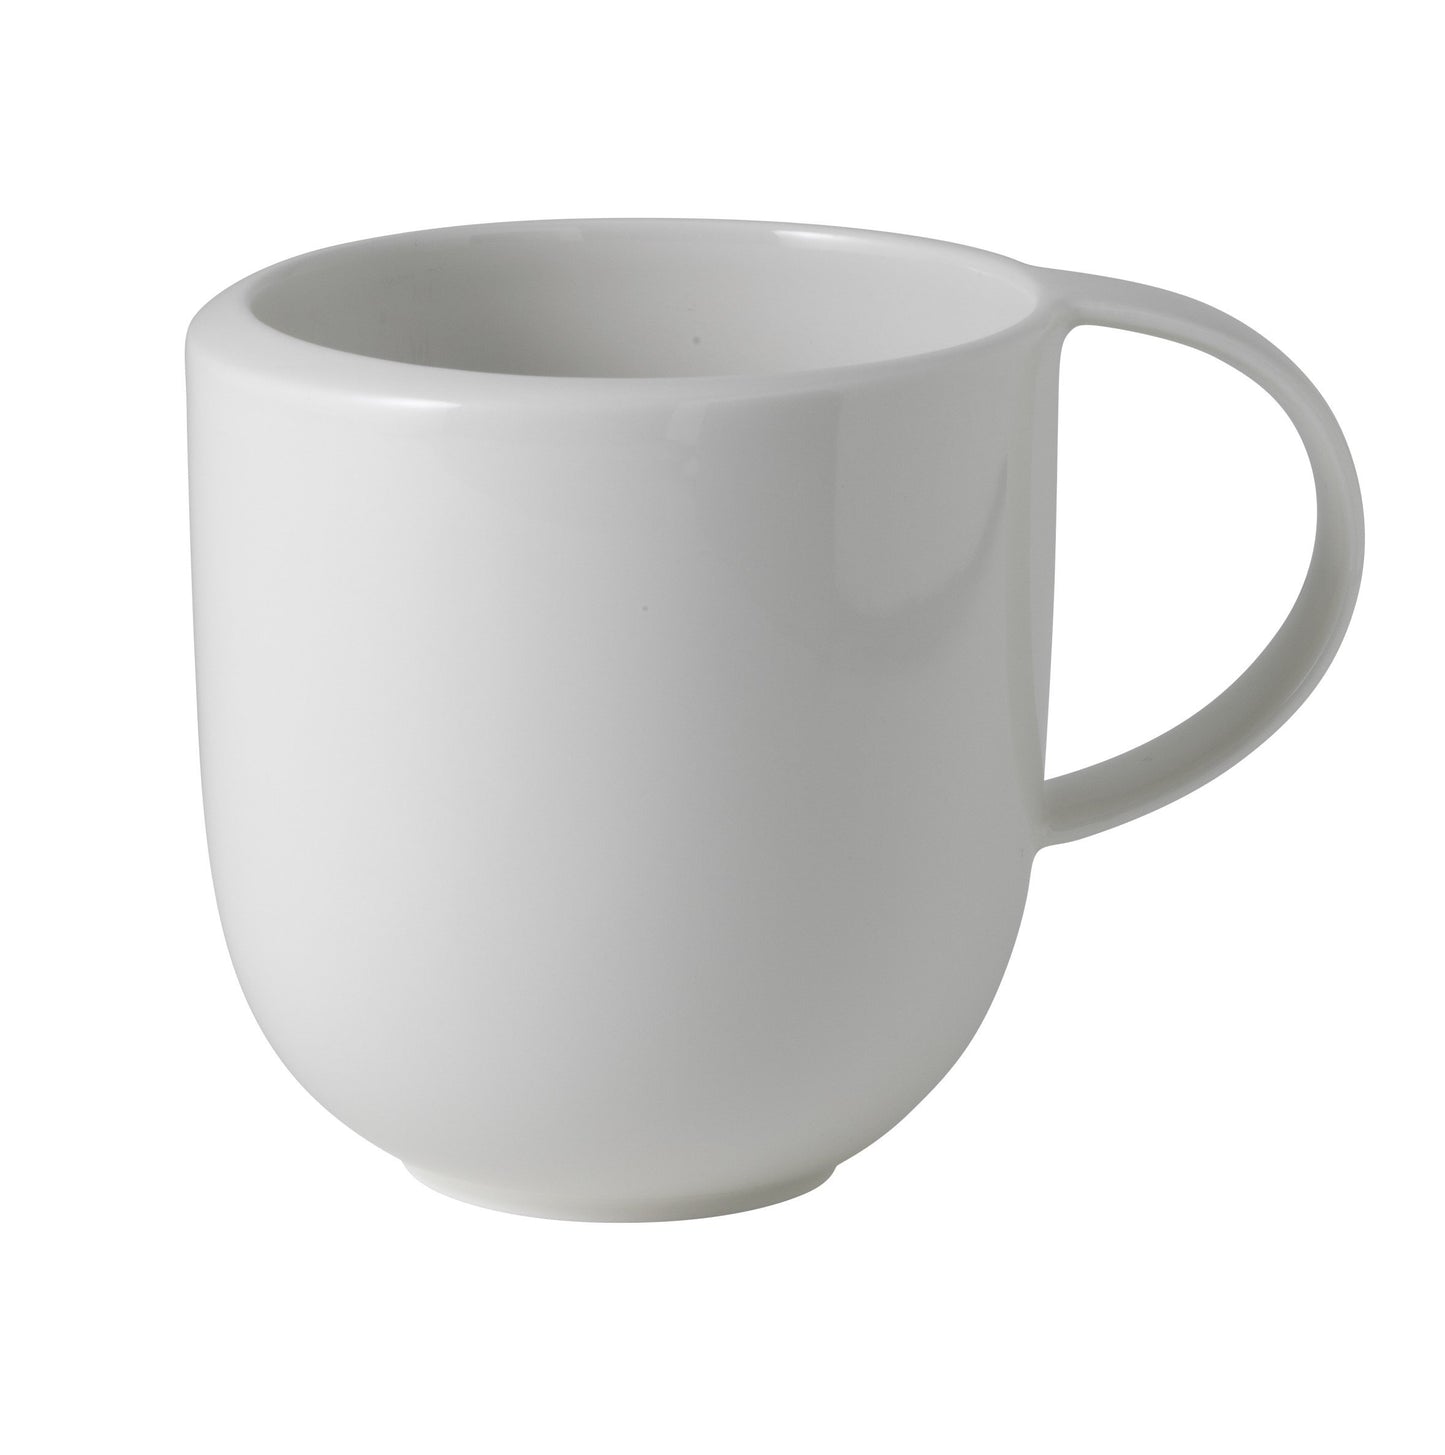 NewMoon mug 6 Pieces 0.39L